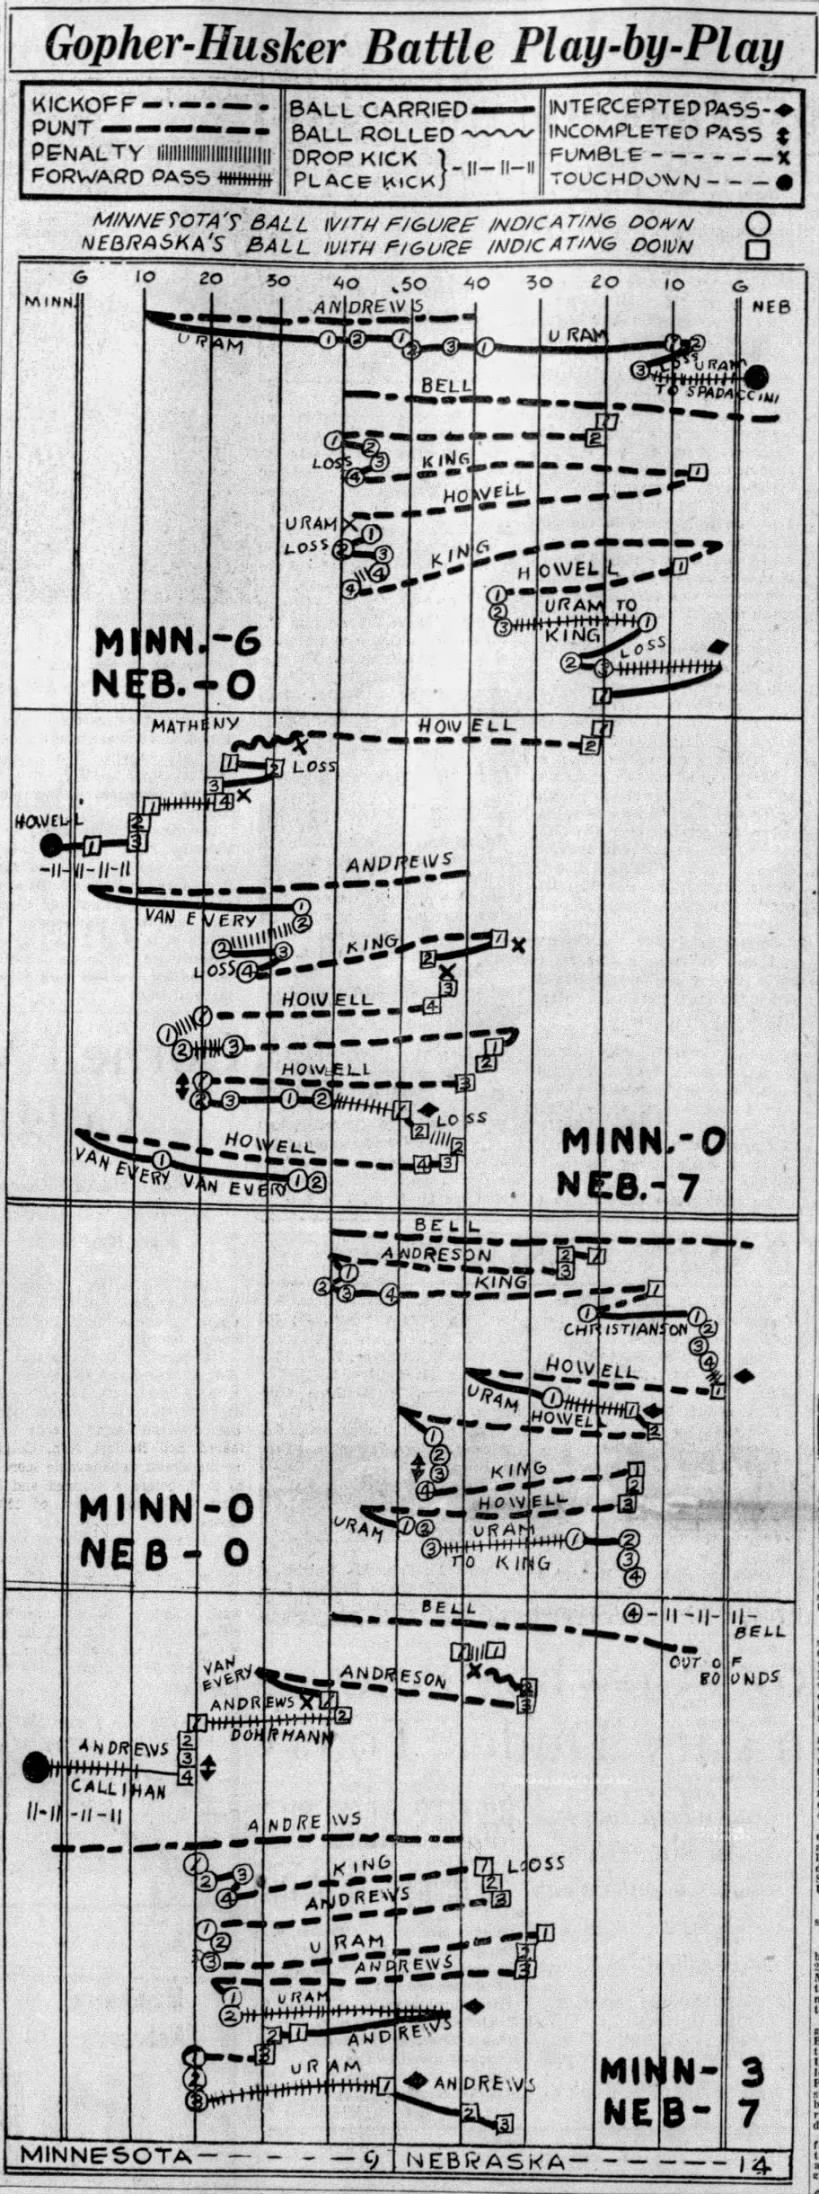 1937 Nebraska-Minnesota play chart